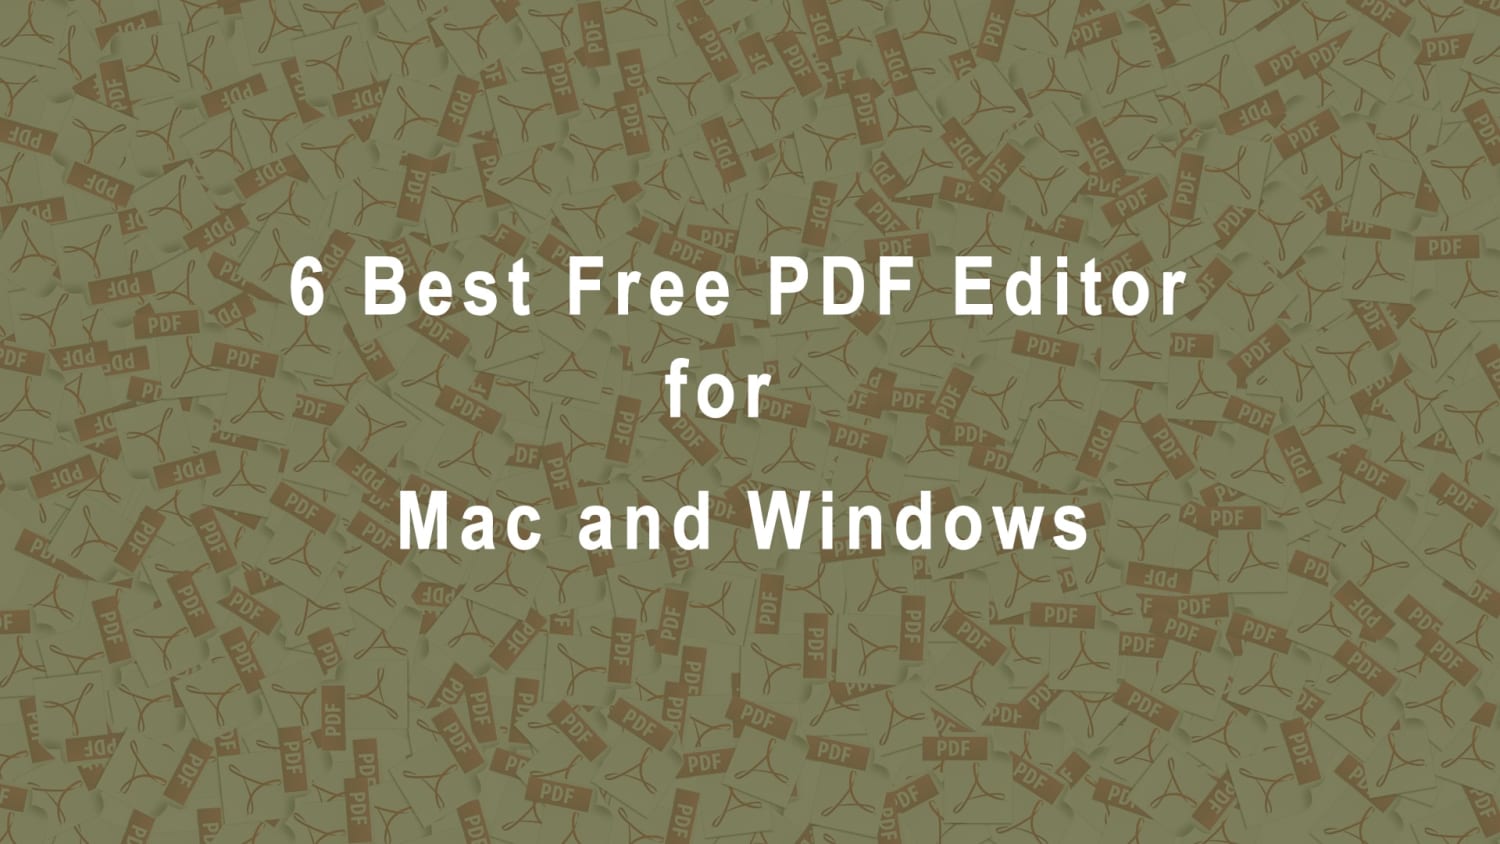 6 Best Free PDF Editors for Mac and Windows